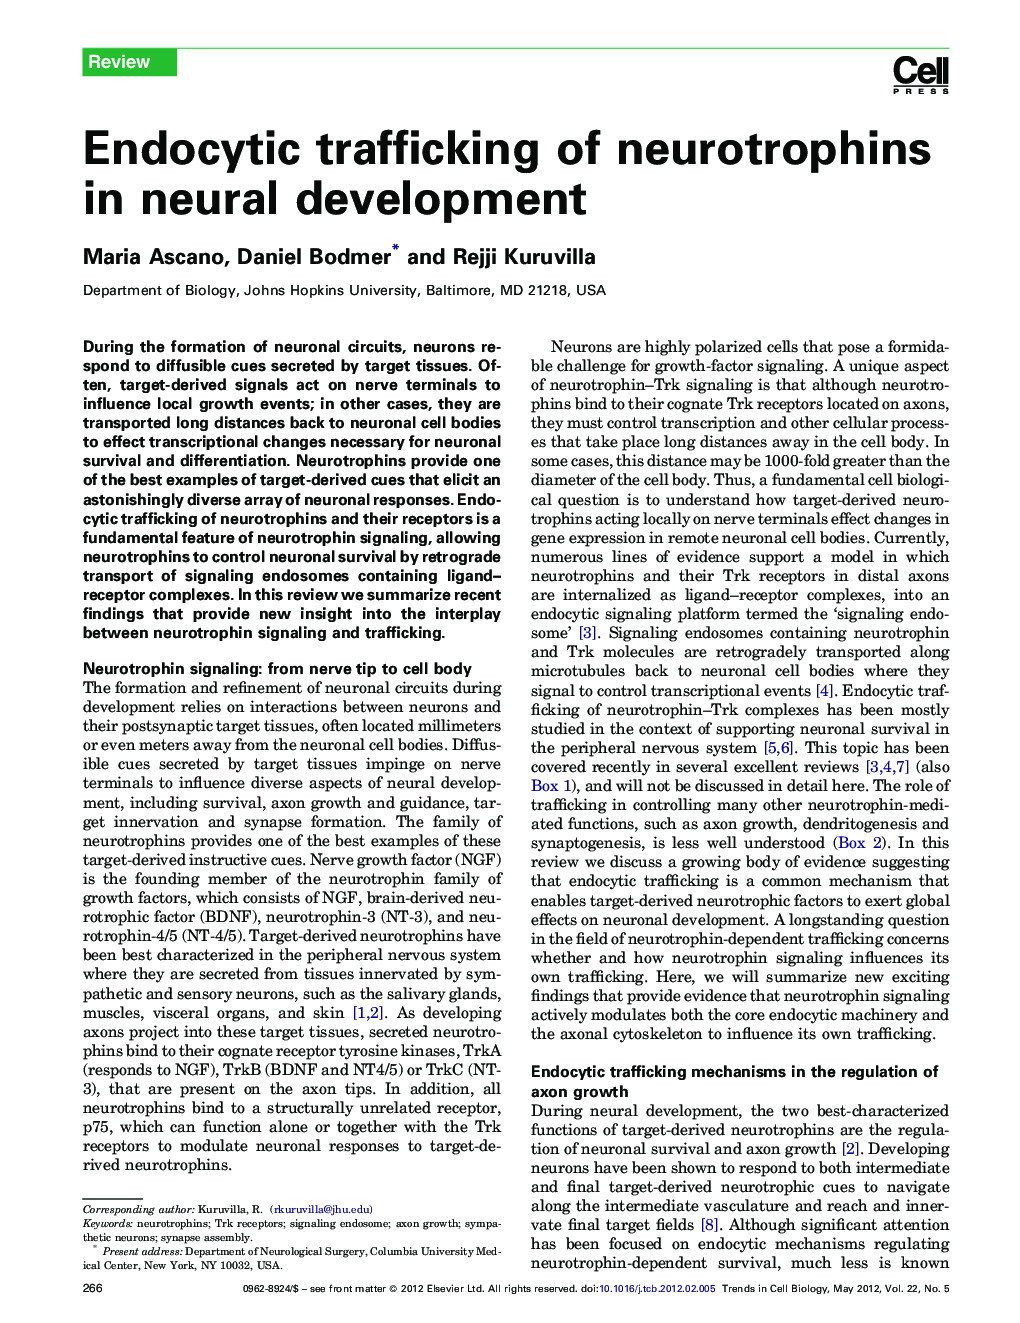 Endocytic trafficking of neurotrophins in neural development